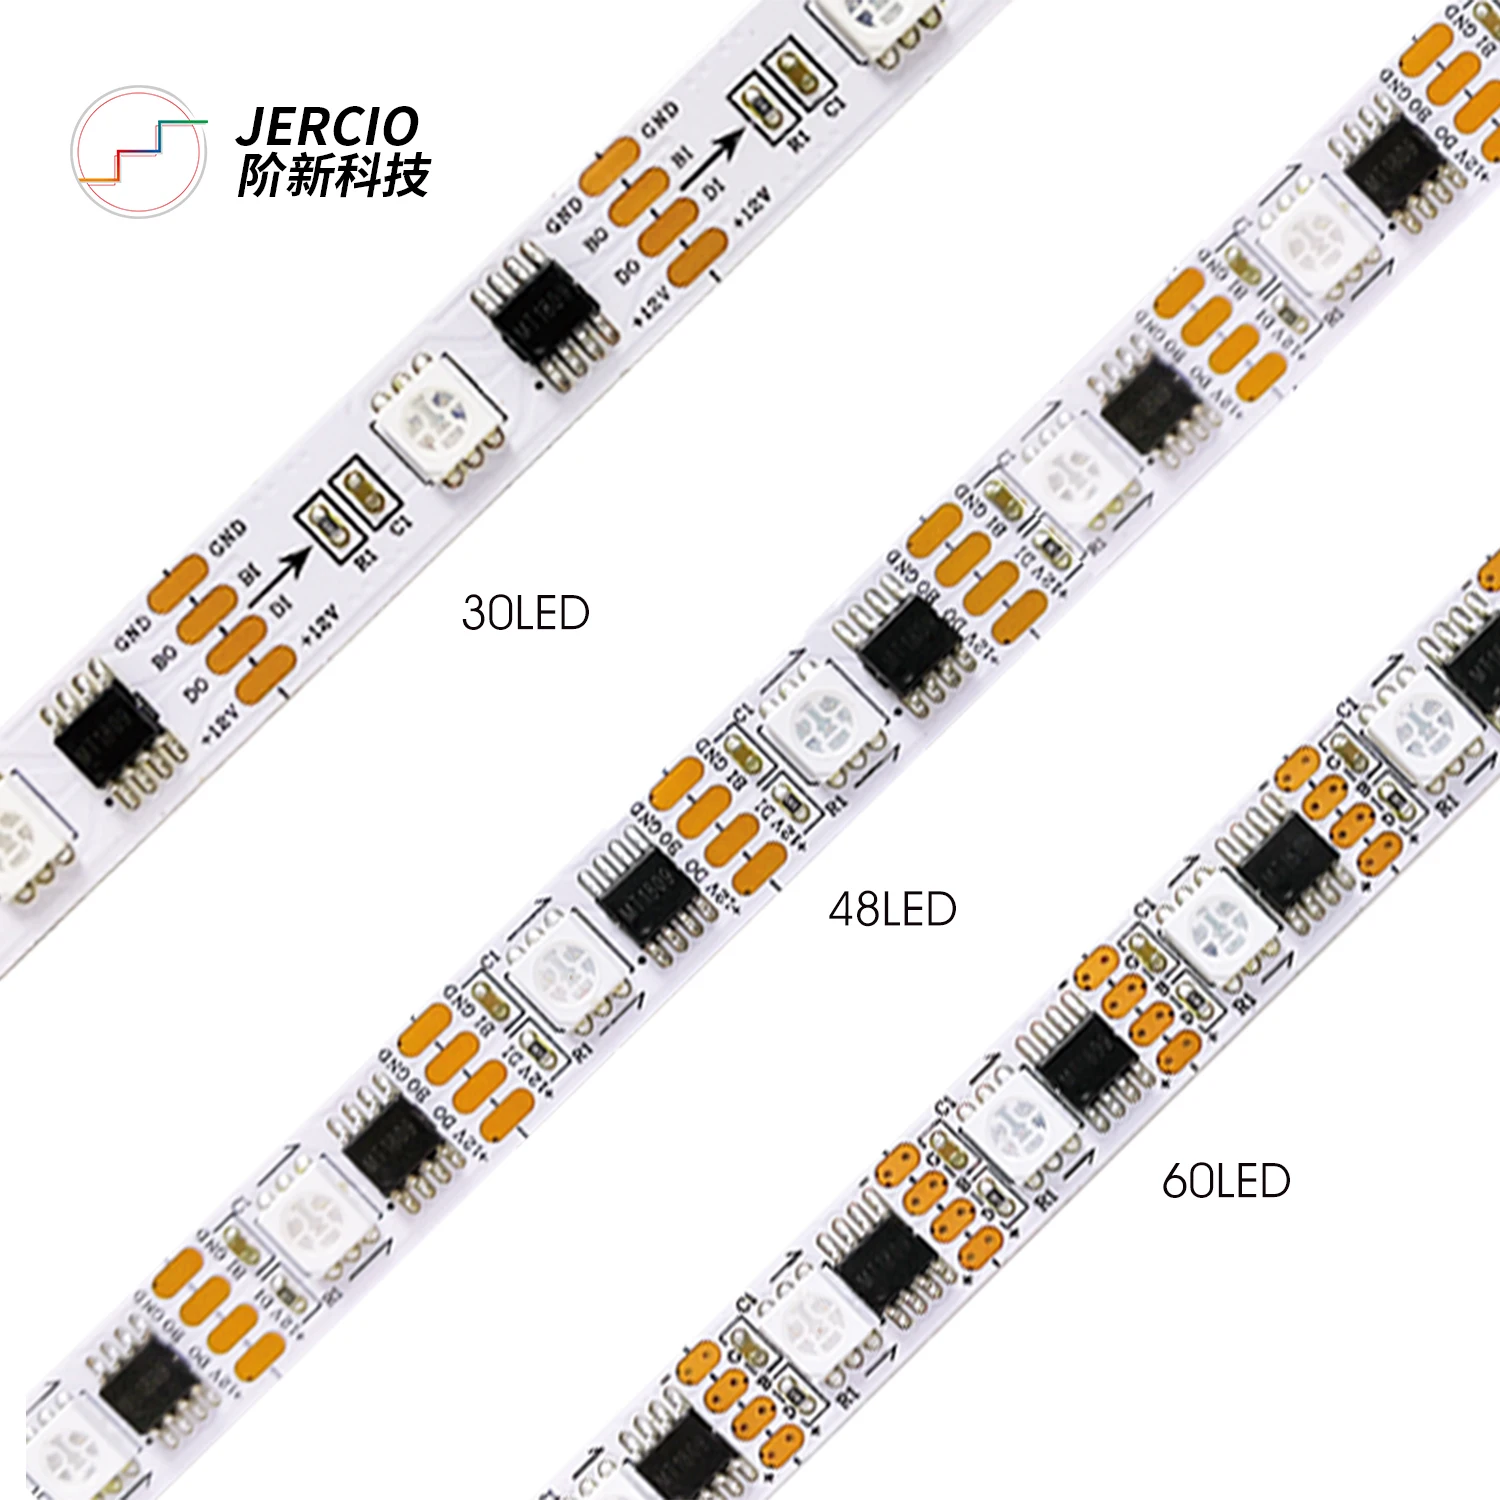 Jercio XT1901S break point continuous transmission external IC DC12V RGB led light strip for decorative lighting